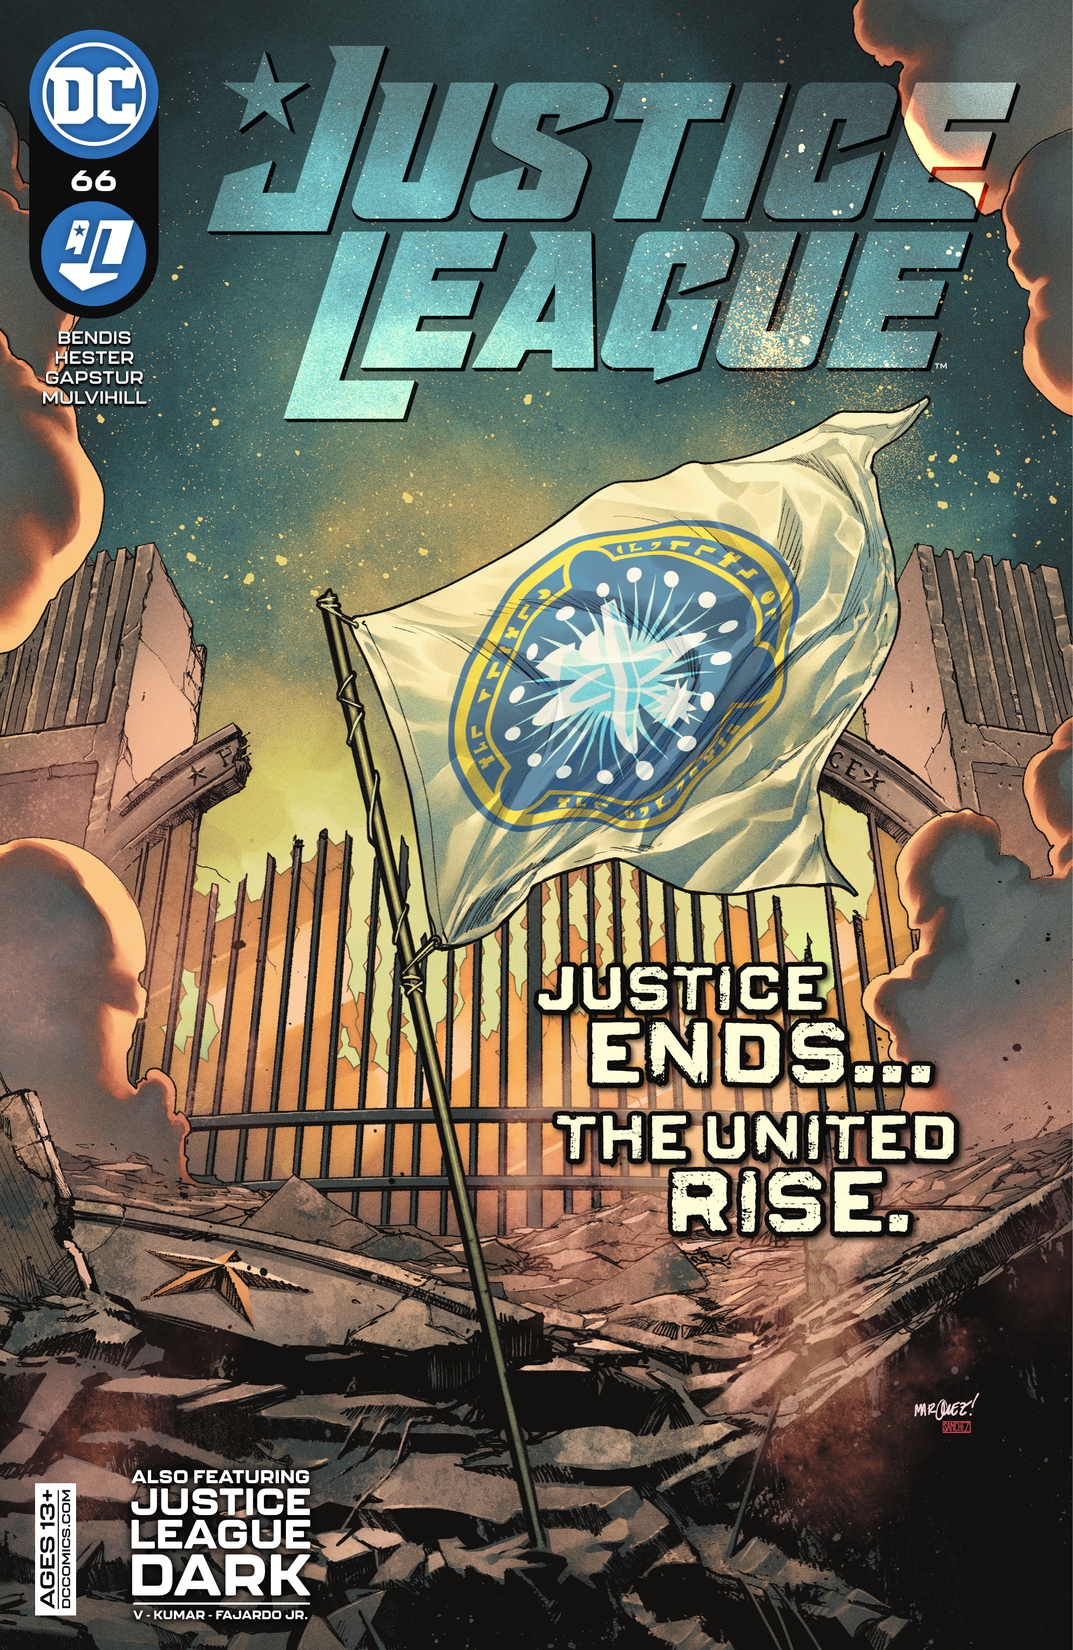 Justice League (2018-) #66 preview images